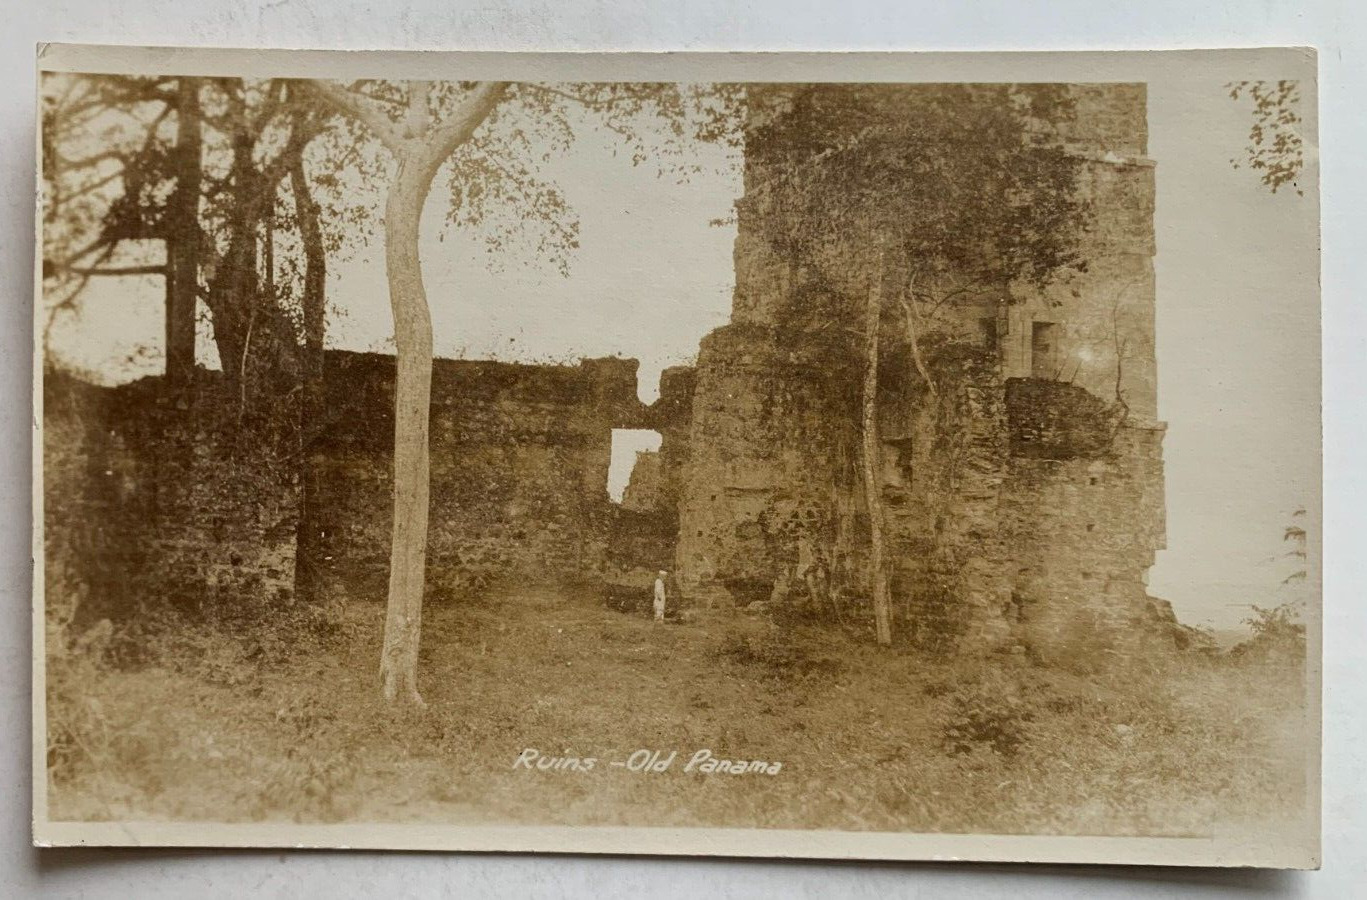 ca 1920s Panama RPPC Real Photo Postcard Old Panama Ruins buildings historic AZO